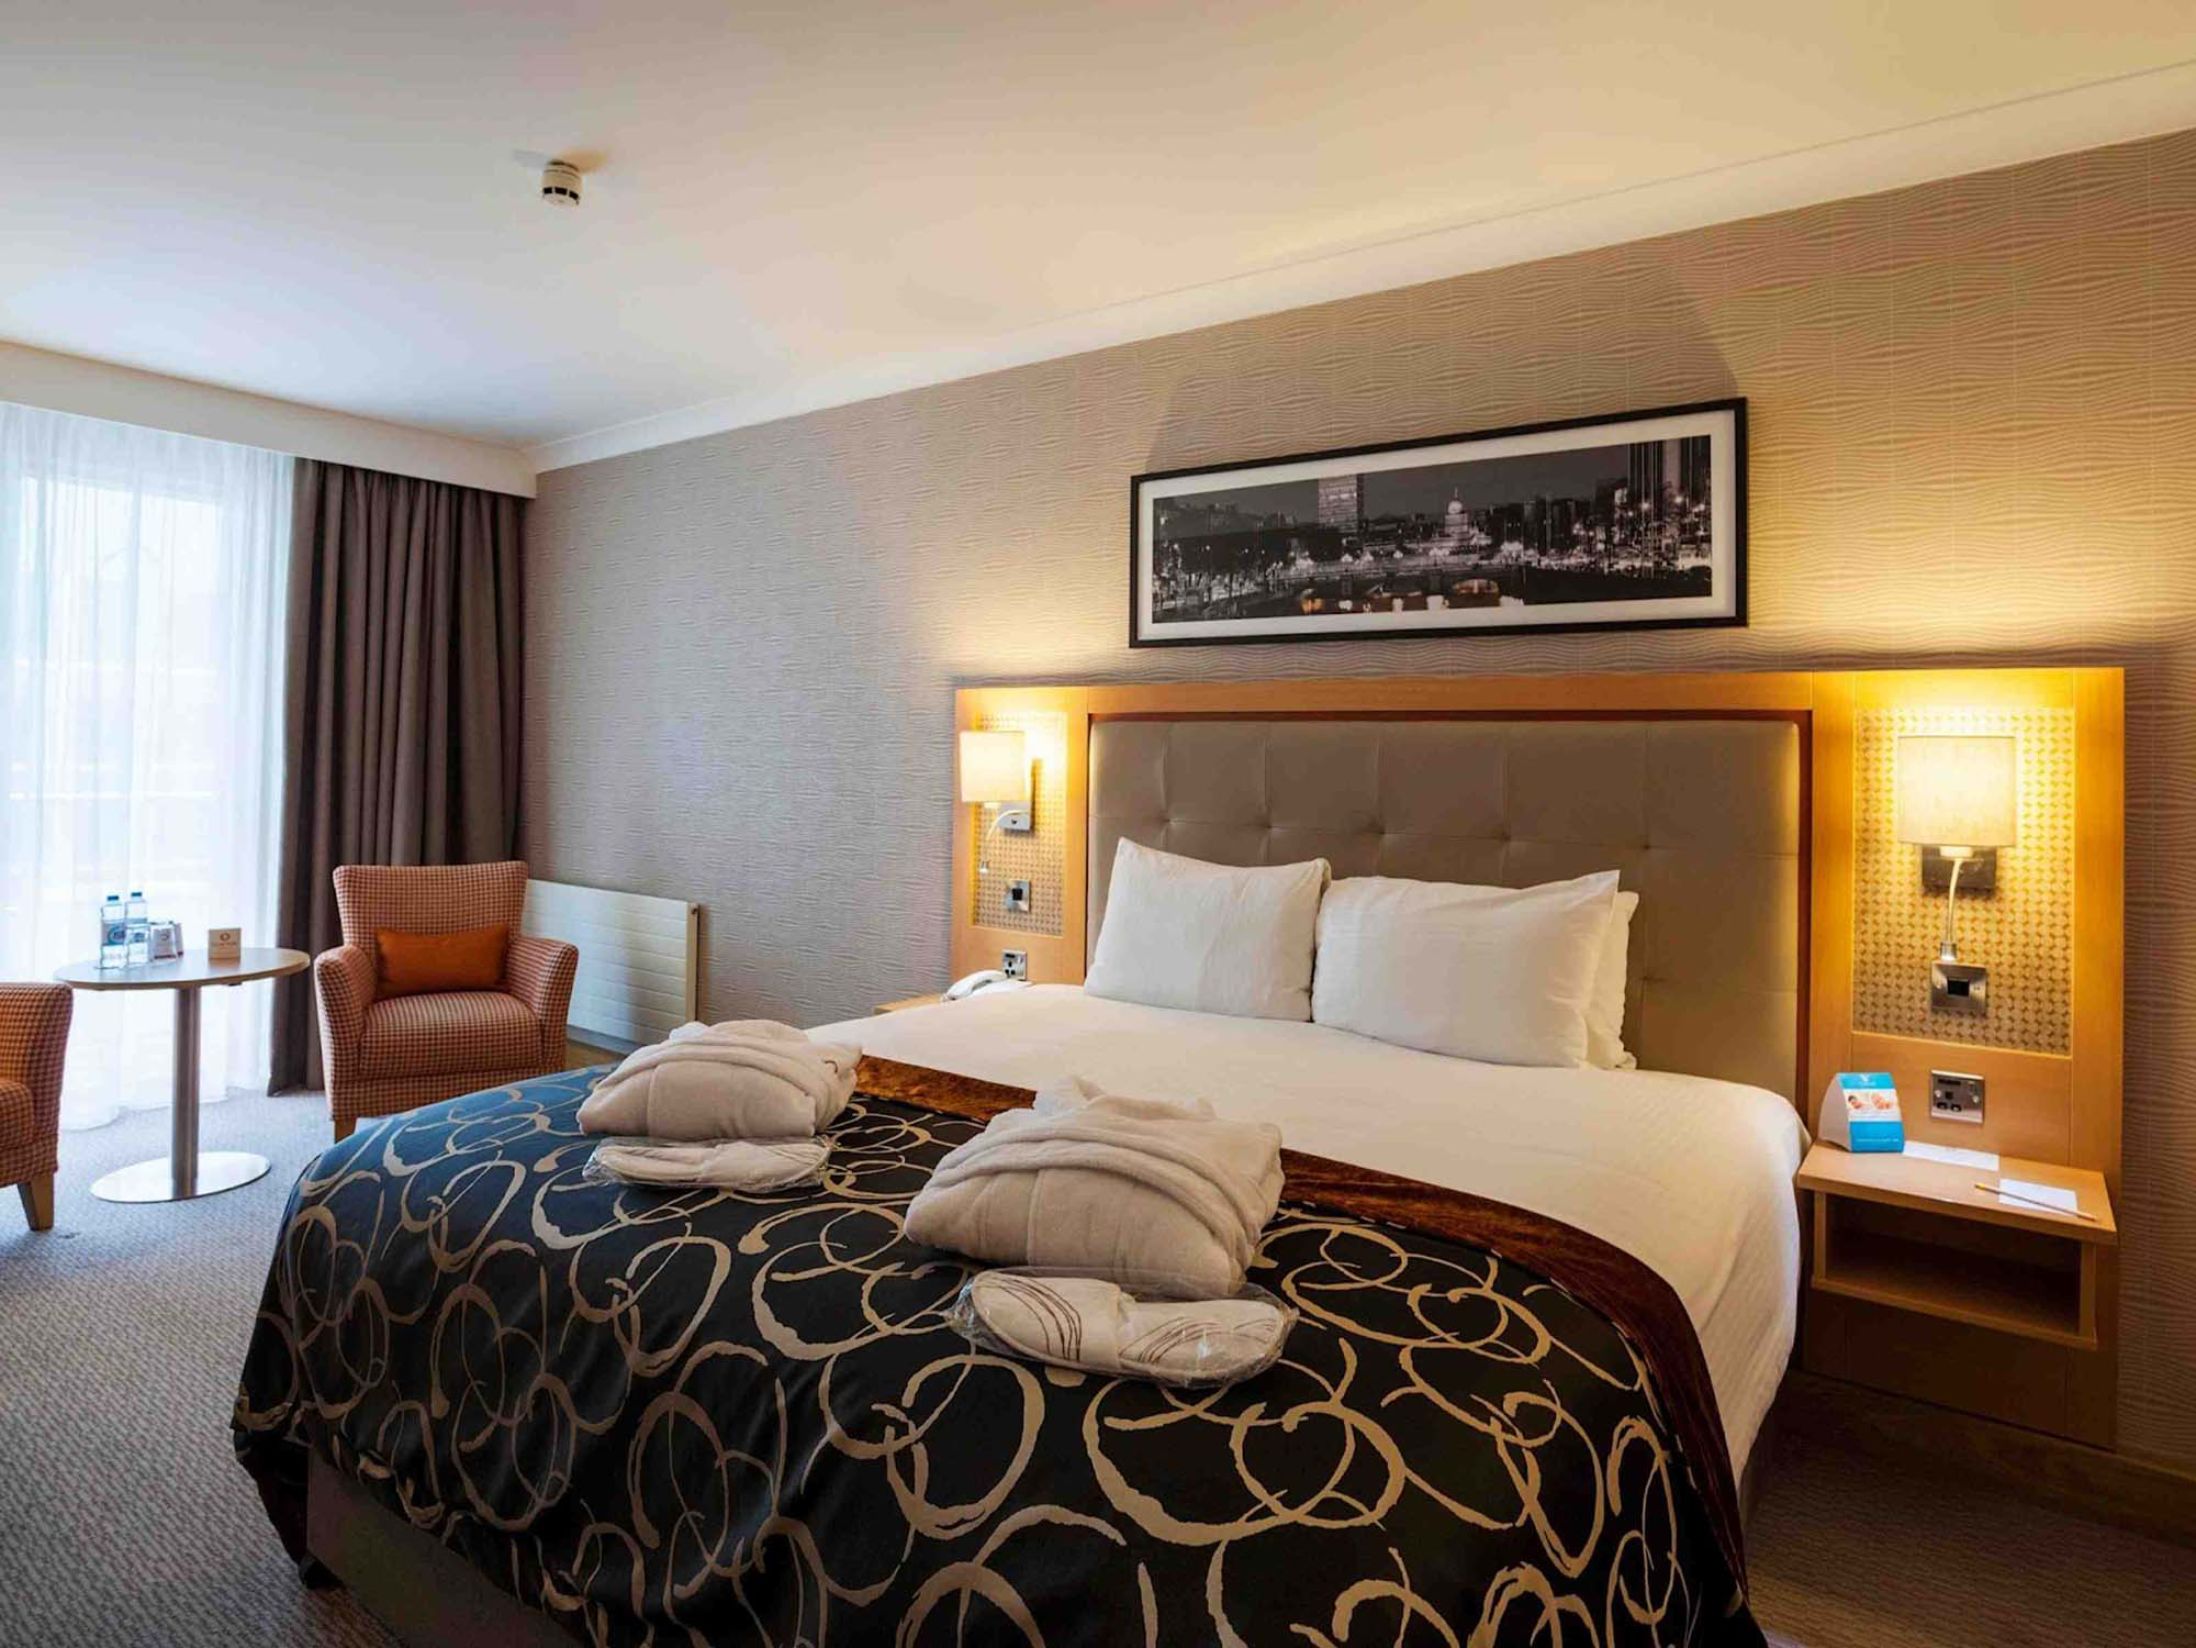 Best Hotels in Dublin - Clayton Hotel Cardiff Lane